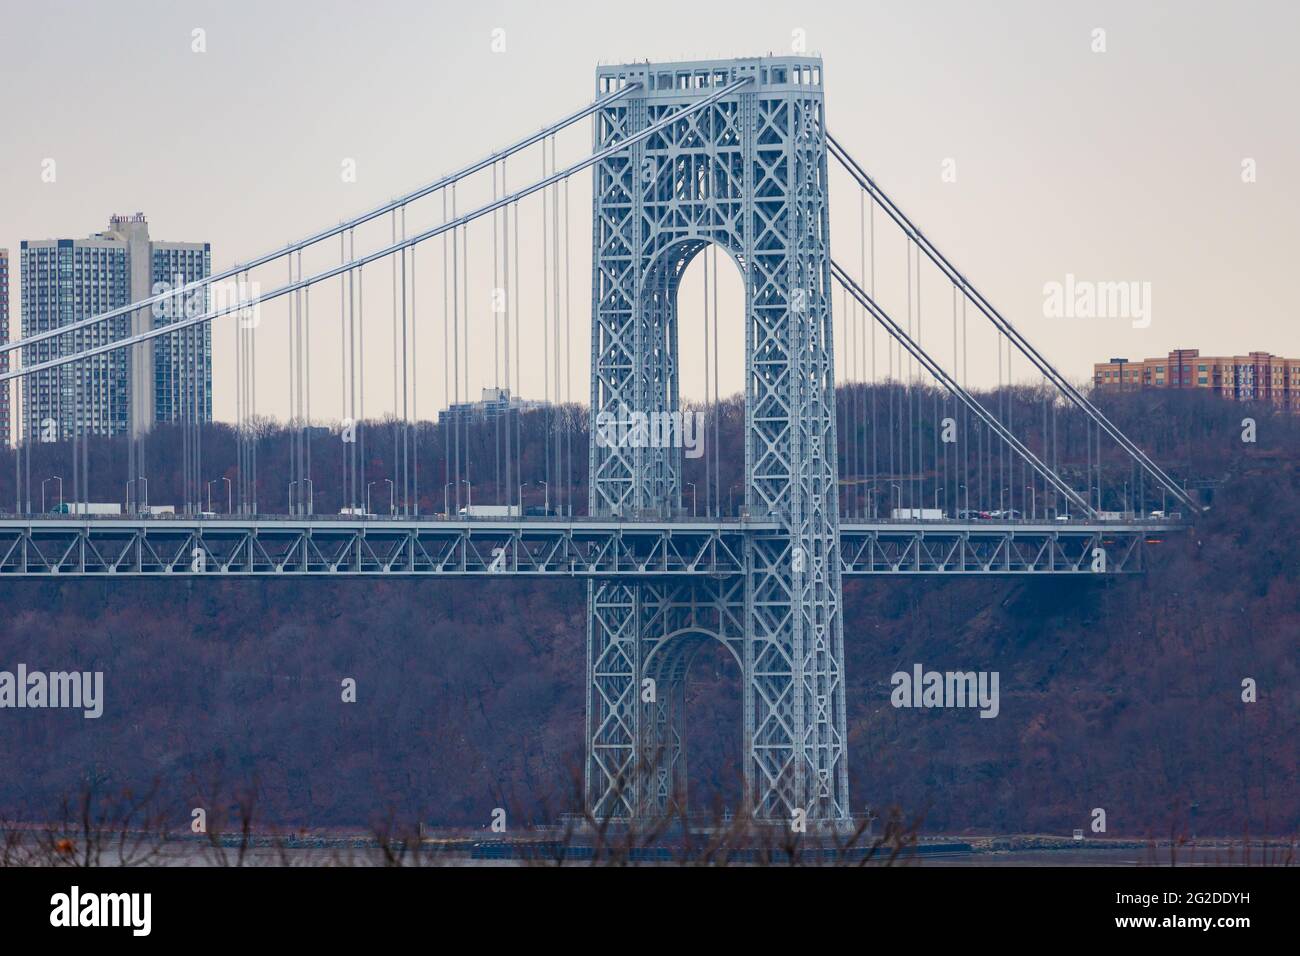 George Washington Bridge between Manhattan and New Jersey, New Jersey side. Stock Photo